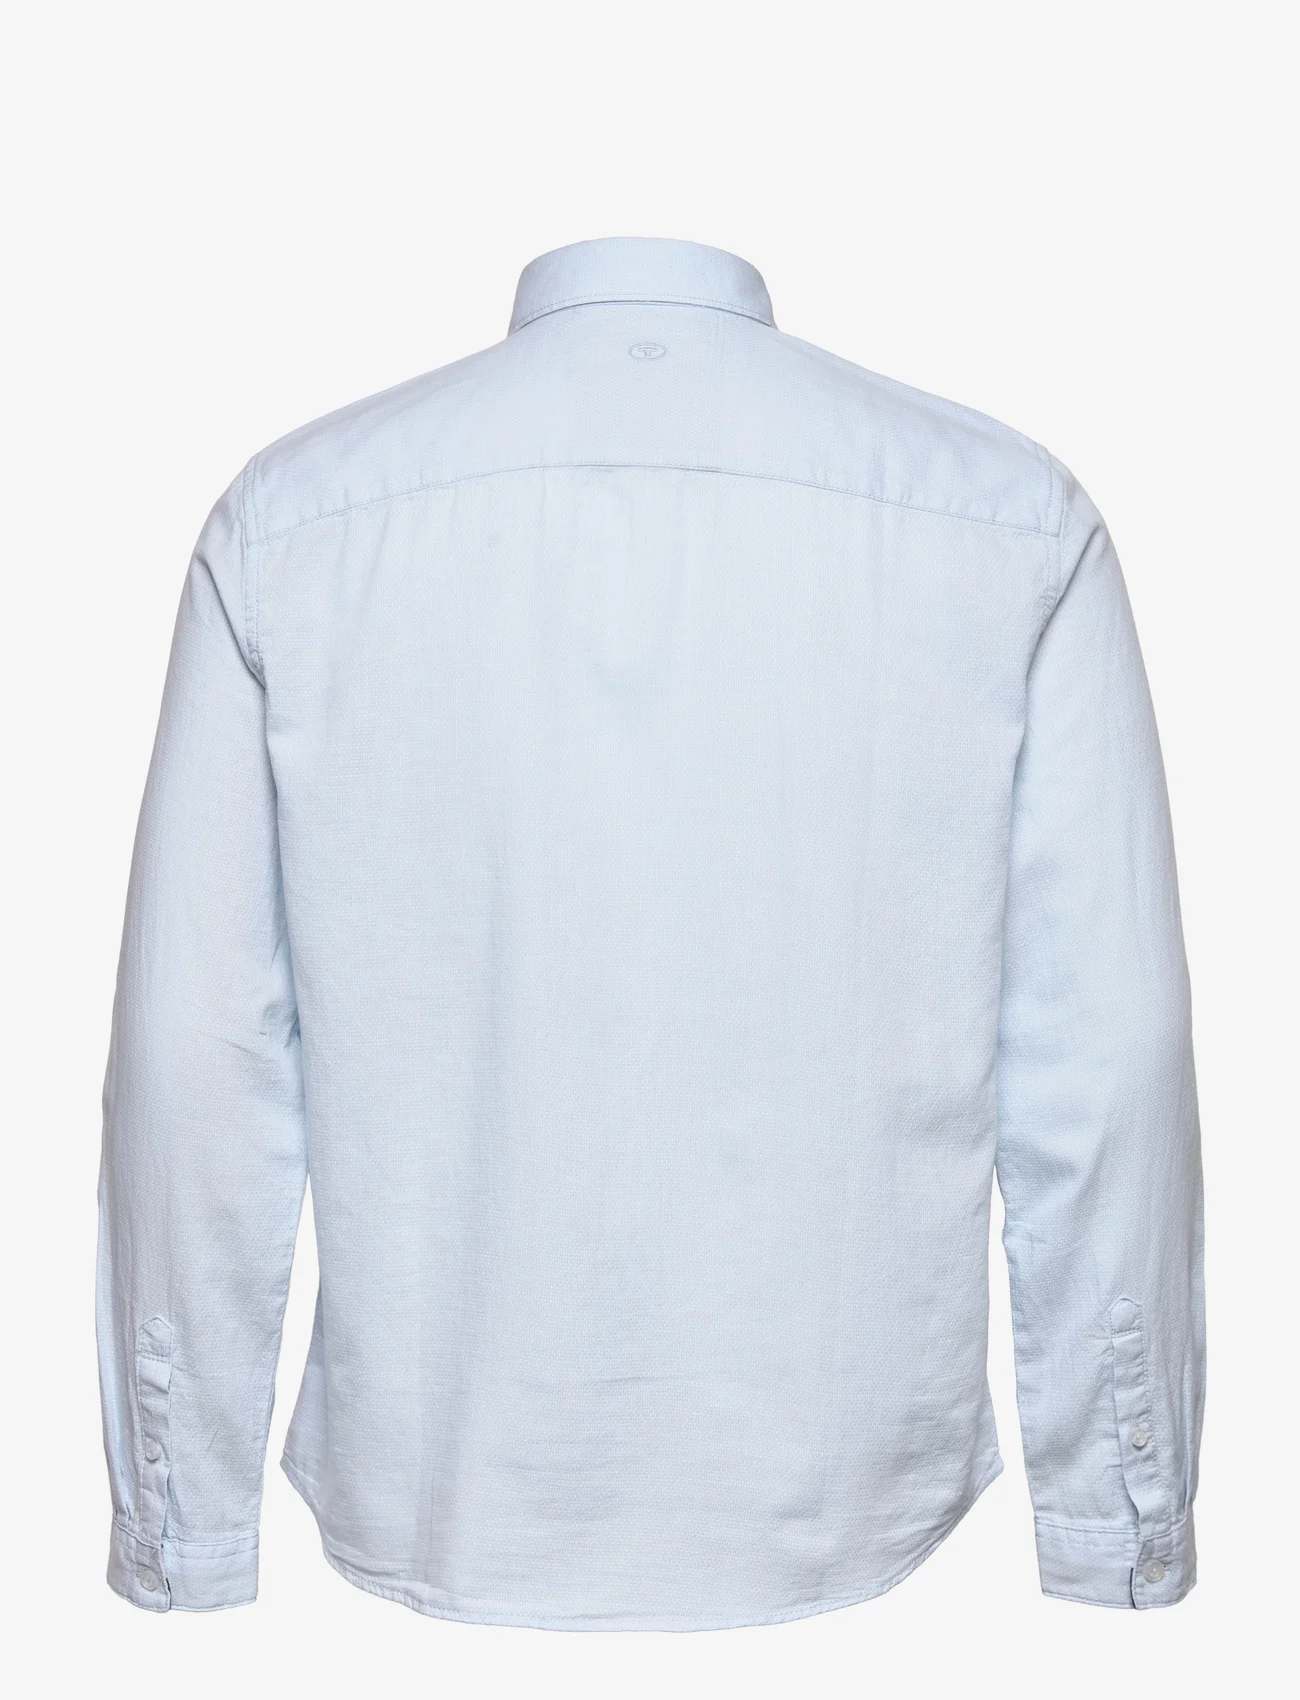 Tom Tailor - structured shirt - basic skjortor - light blue white structure - 1